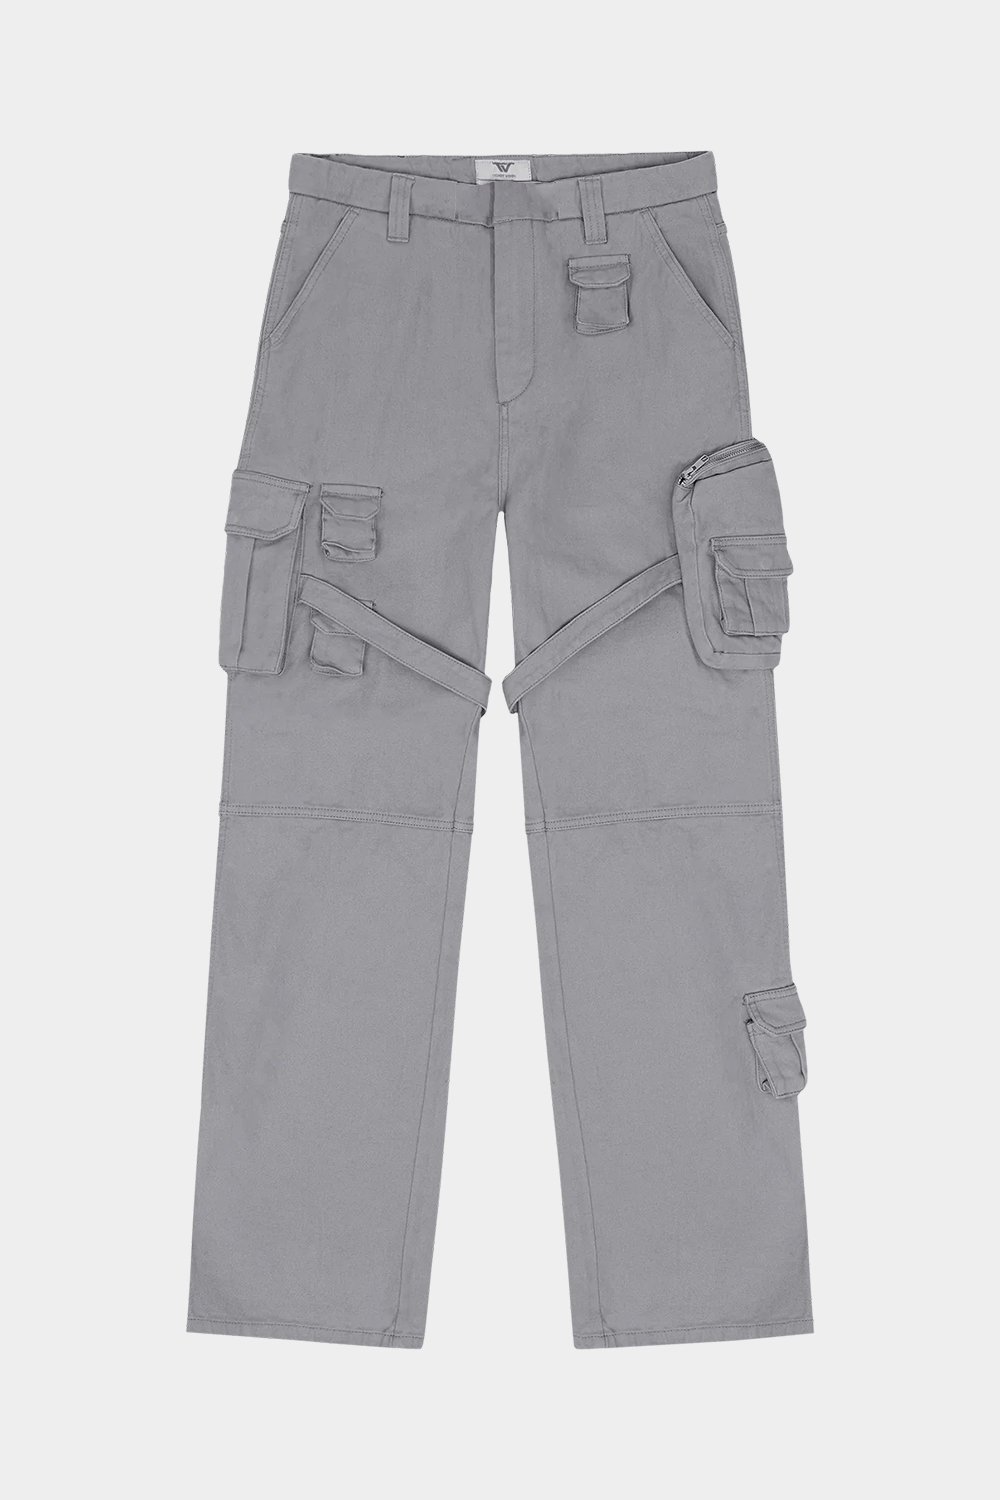 Grey Bondage Cargo Pants (TVS8)